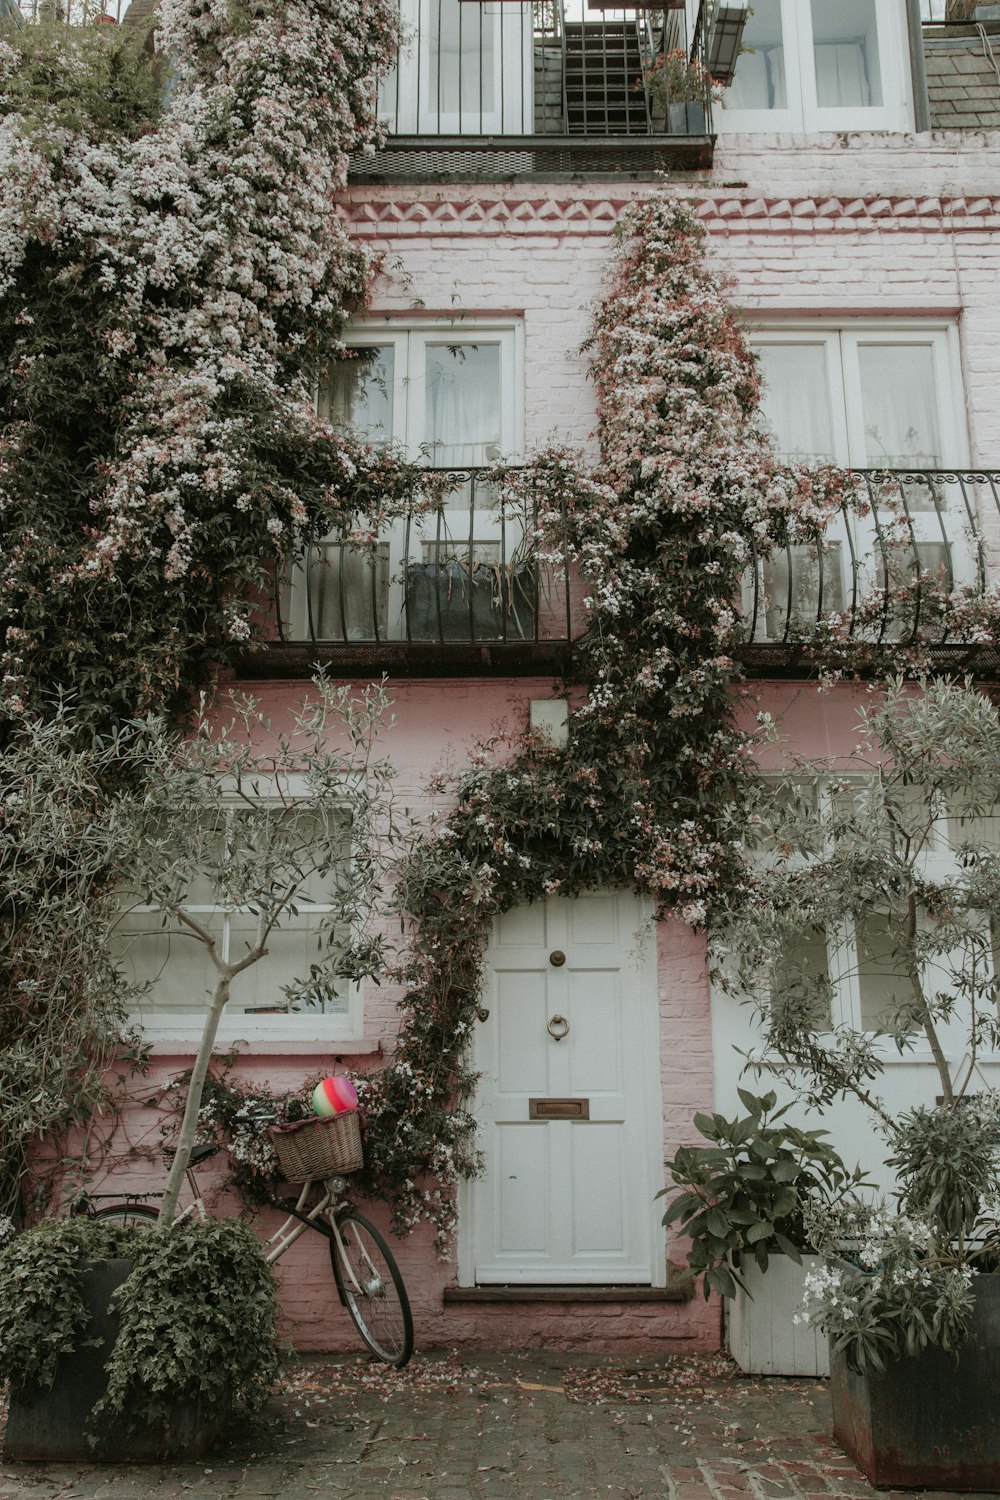 Casa pintada de rosa e branco coberta de plantas e flores